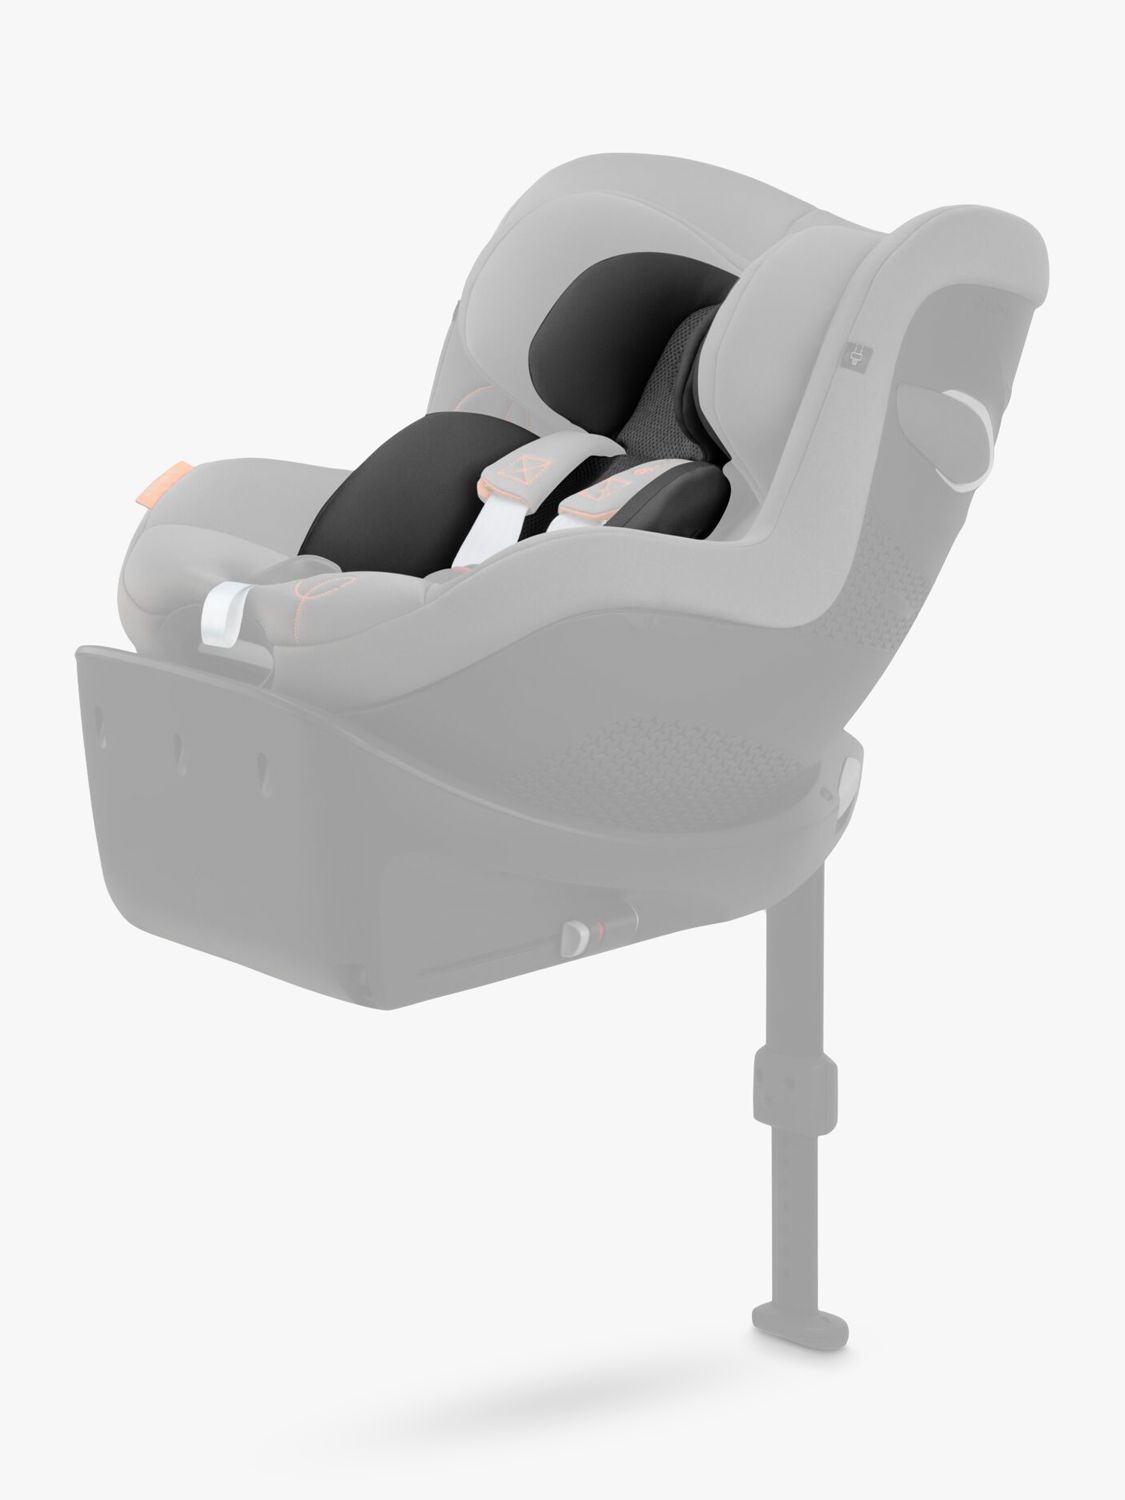 CYBEX Sirona Gi i-Size Car Seat Tutorial 